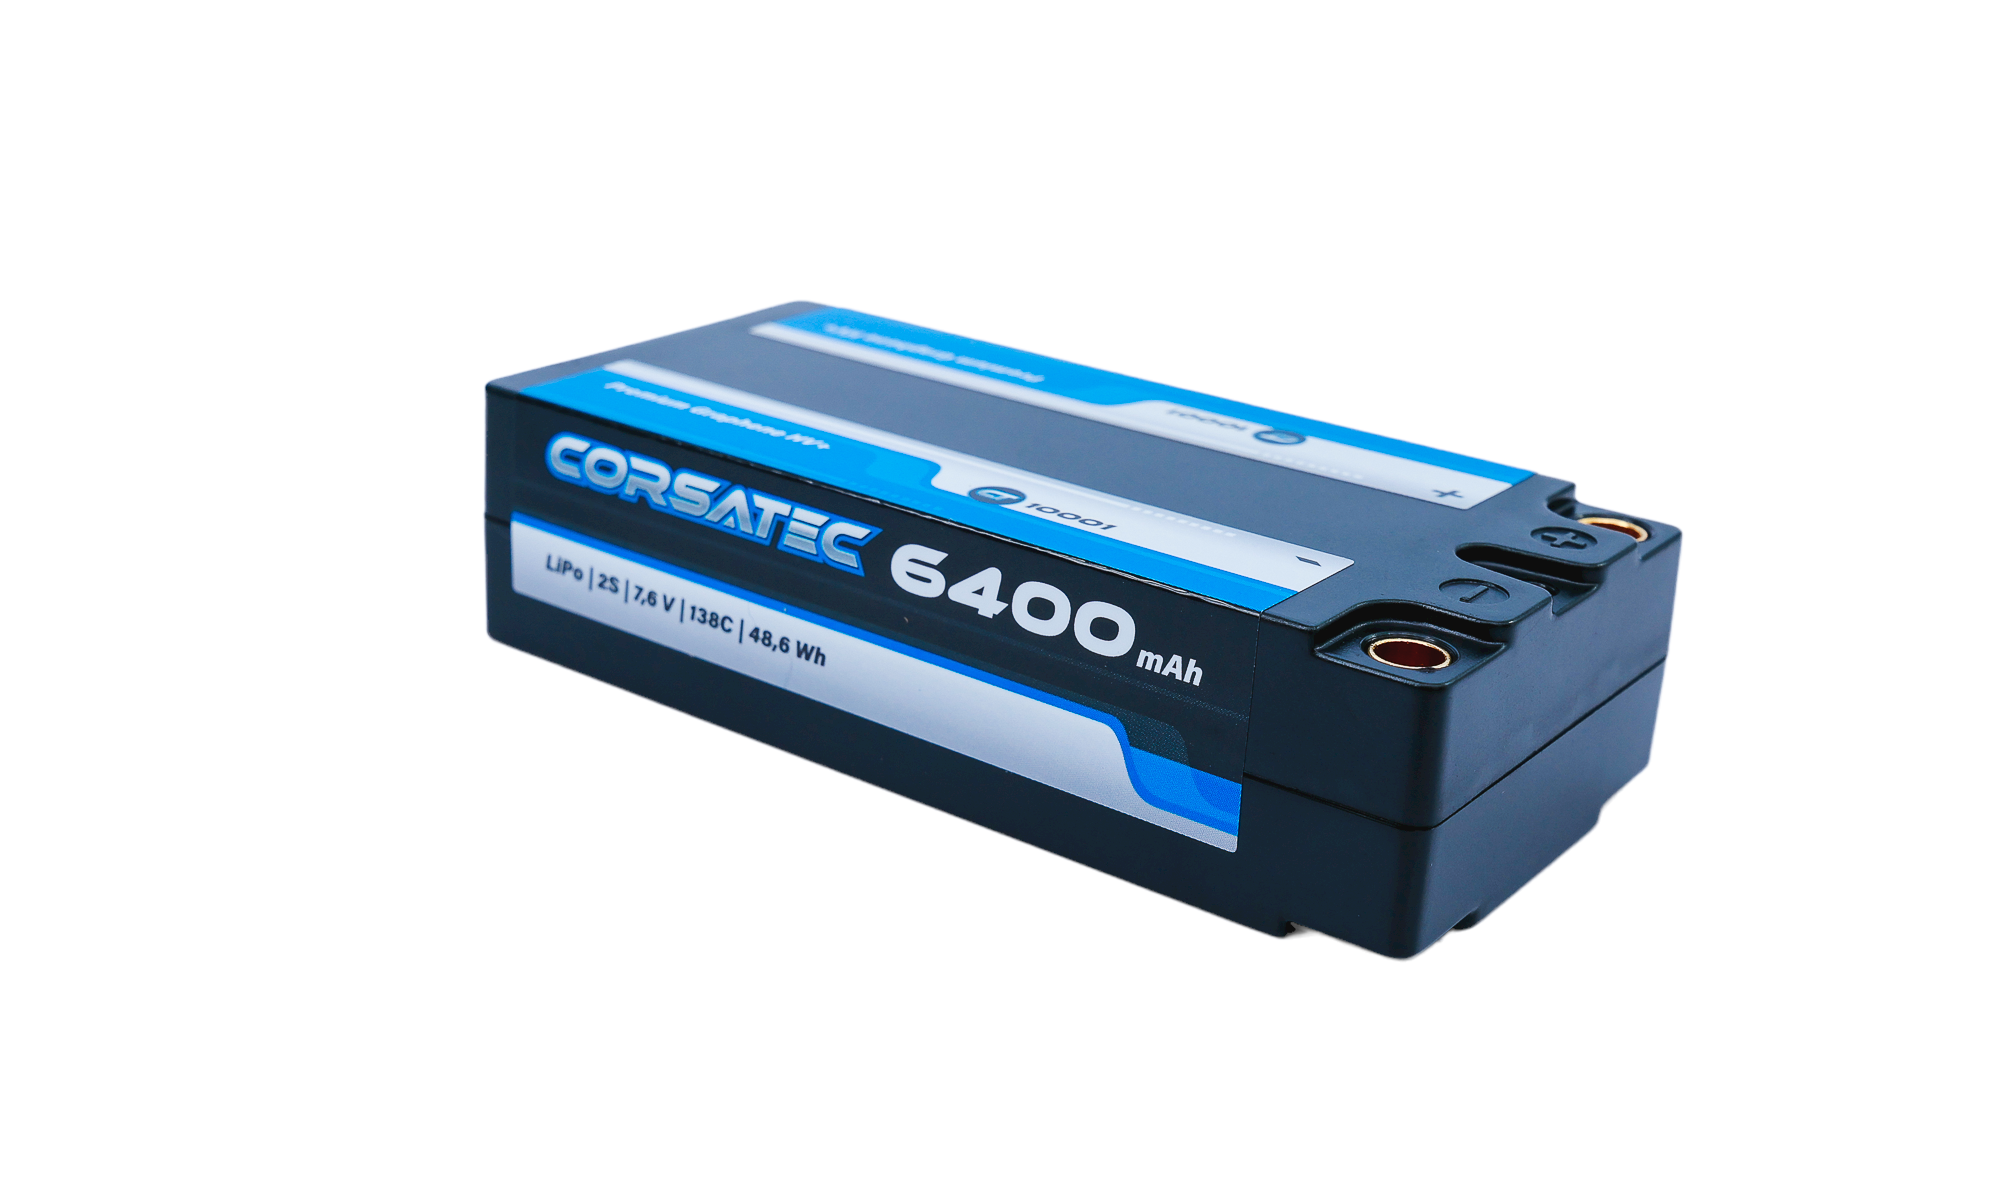 Corsatec Graphene HV+ Lipo 2s shorty 6400 mah